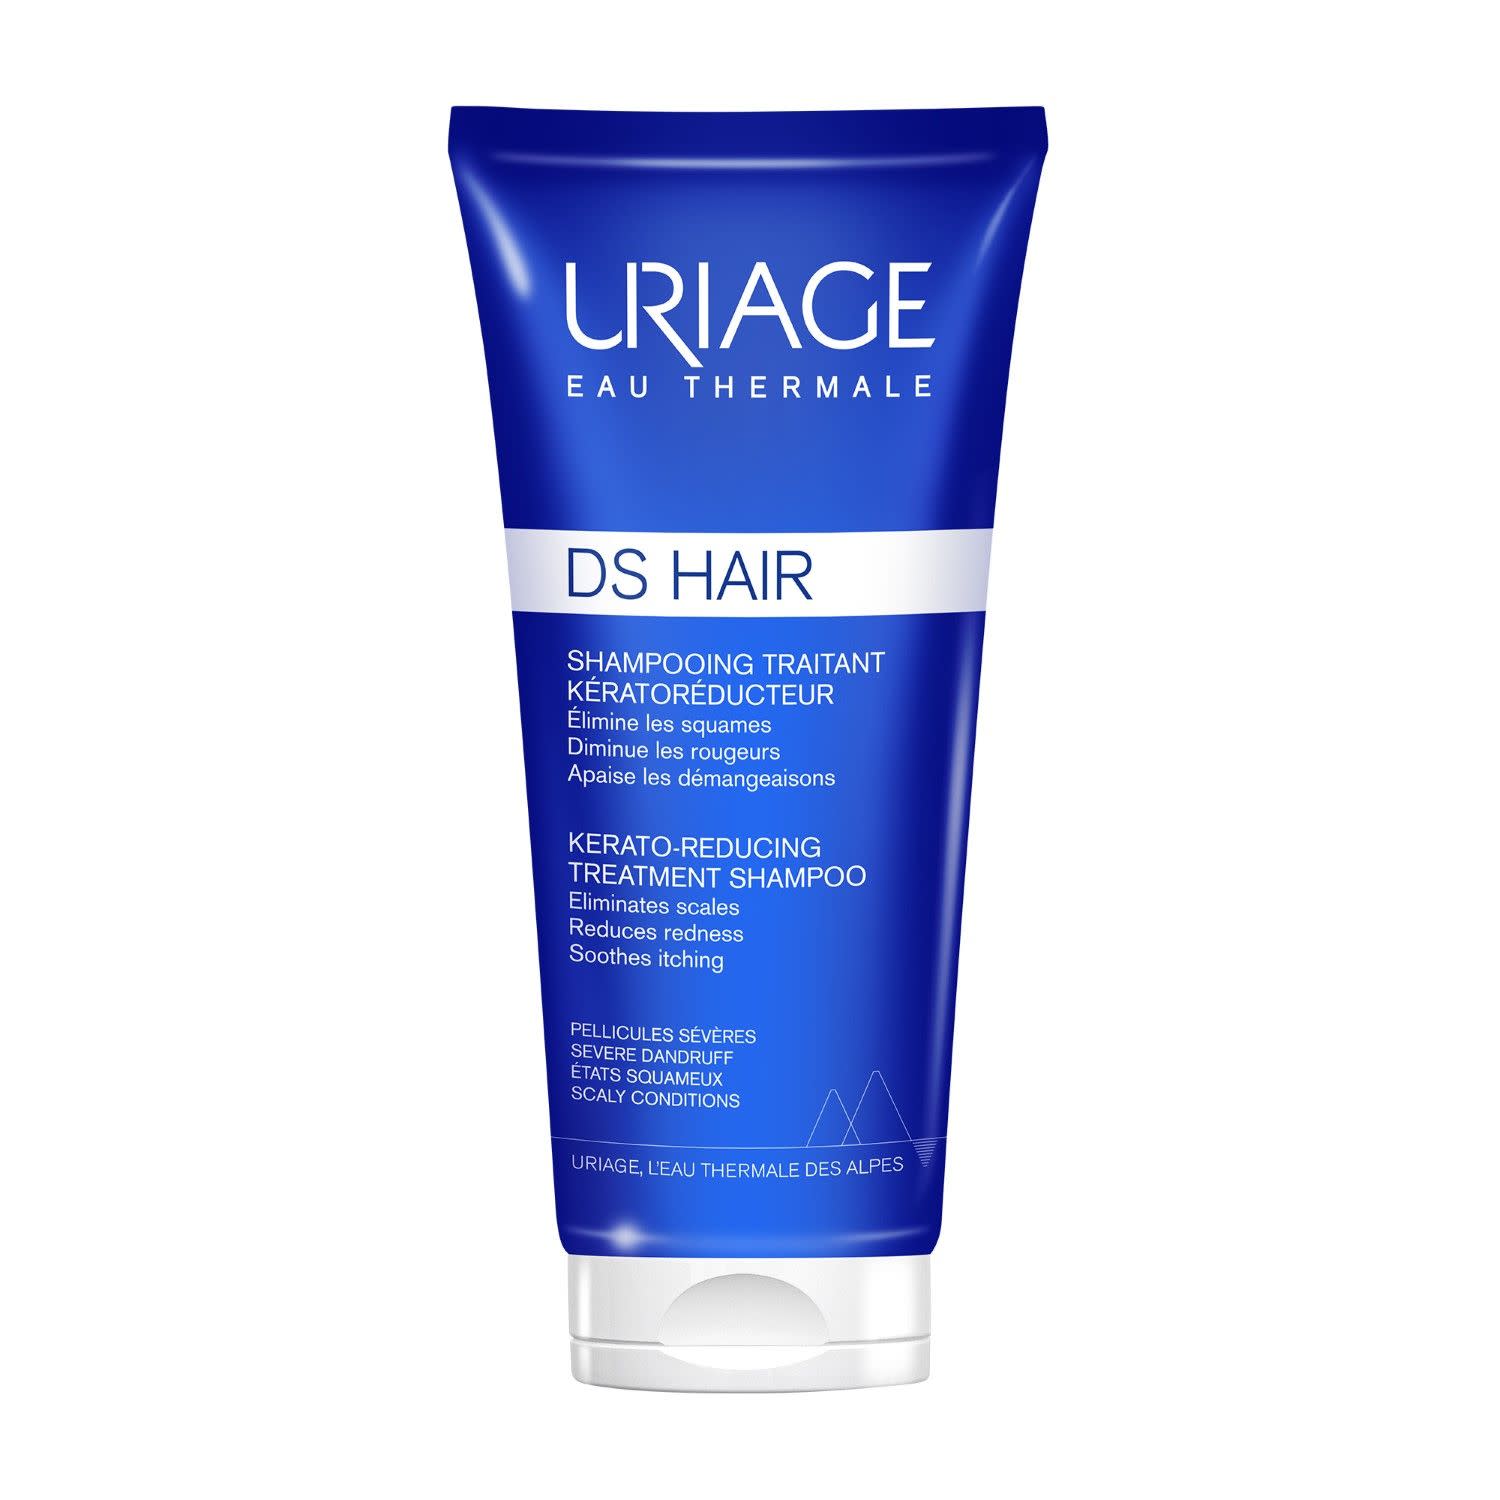 984837599 - Uriage Ds Hair Shampoo Trattamento Cheratoriduttore 150ml - 4741411_2.jpg